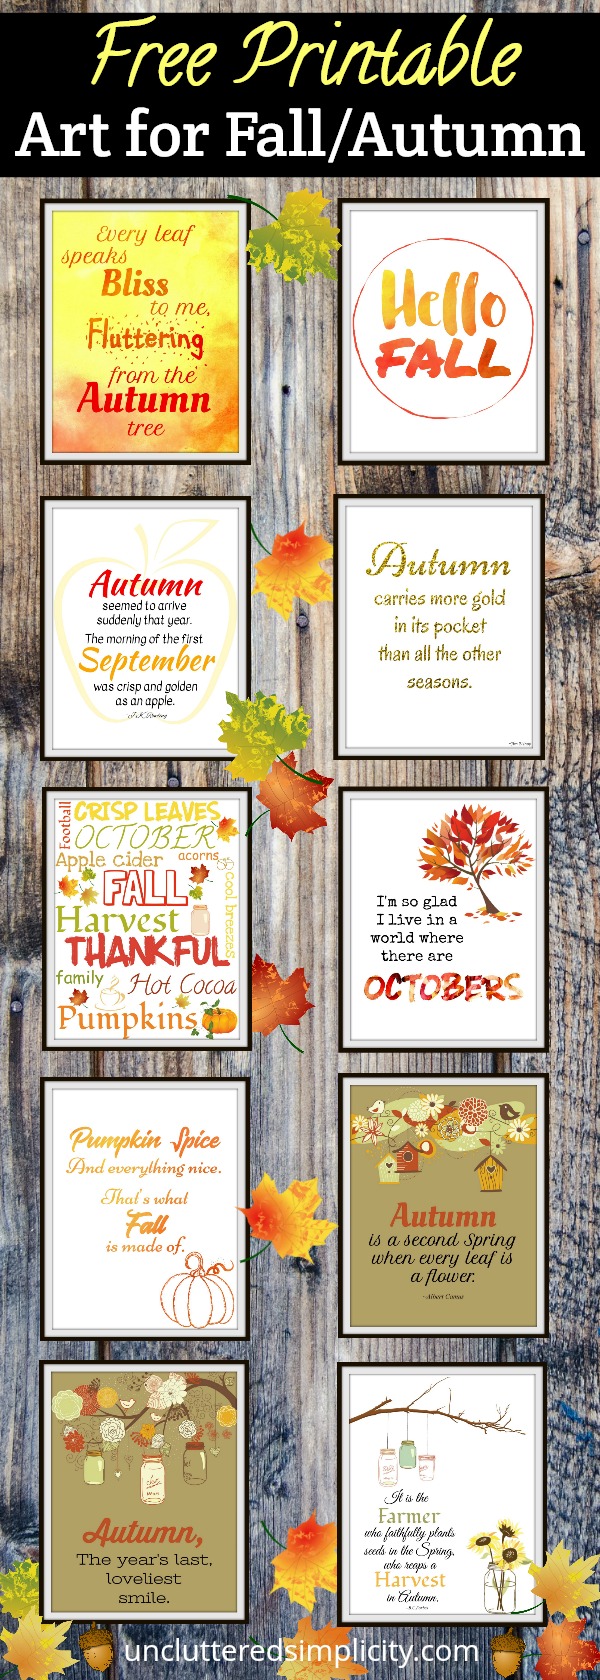 free fall printables | fall wall art | art for fall | autumn printables | free printables #fall #fallprintables